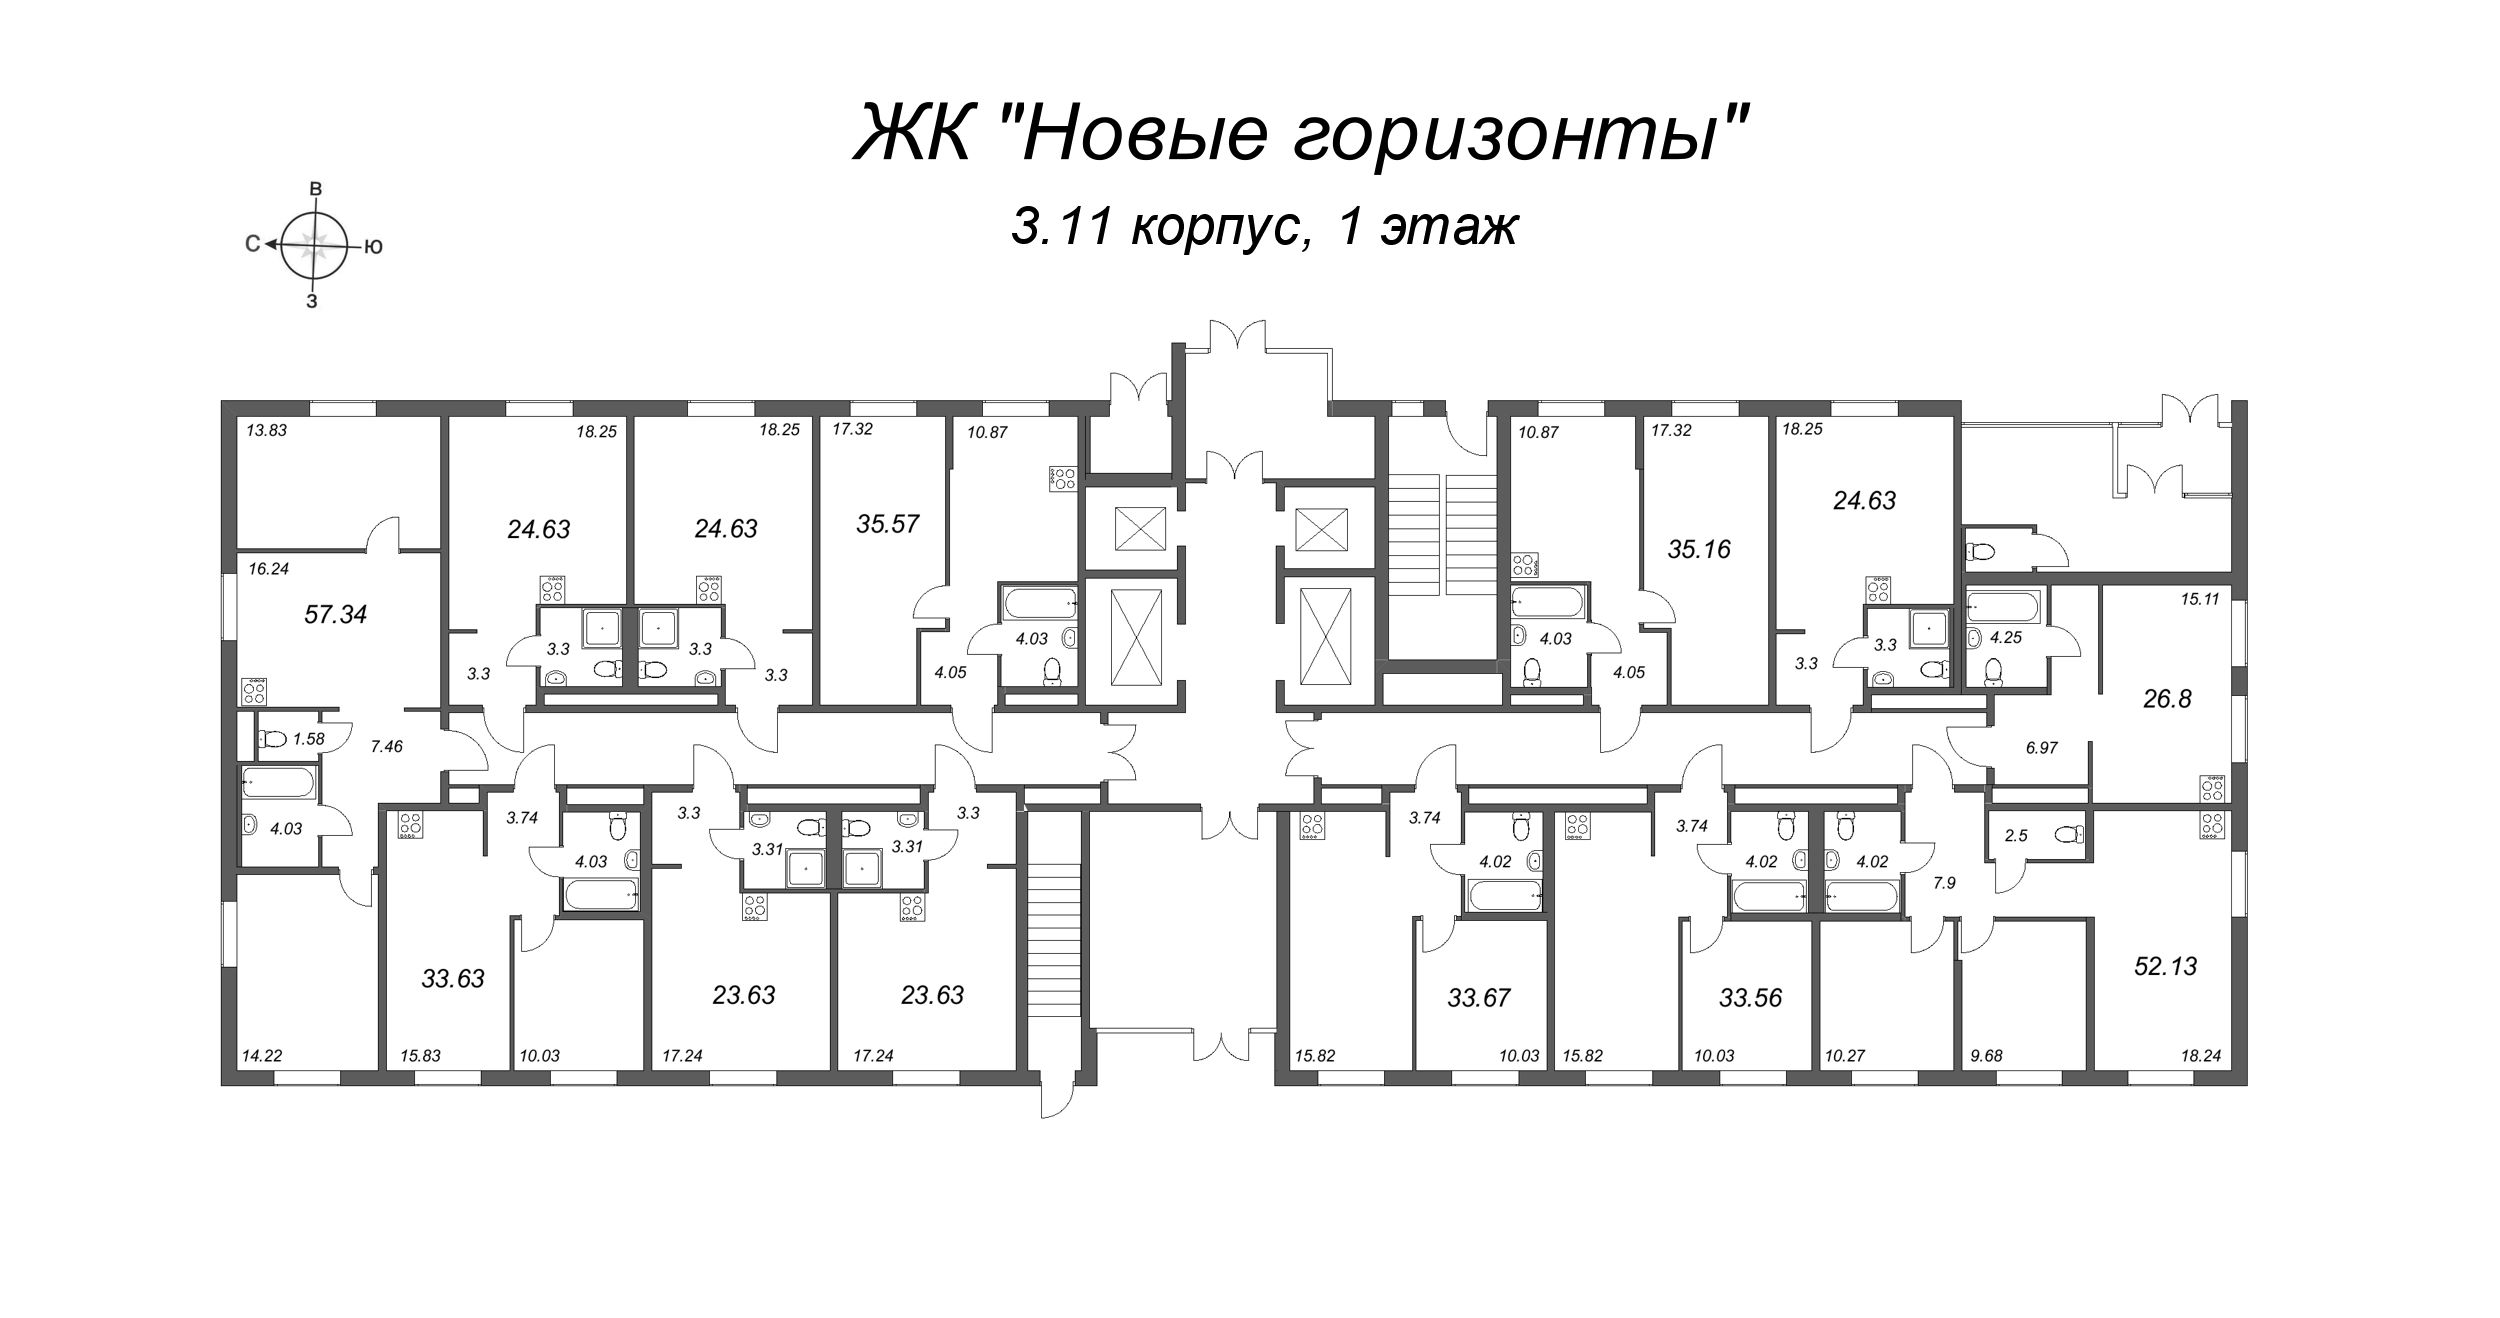 3-комнатная (Евро) квартира, 57.34 м² - планировка этажа